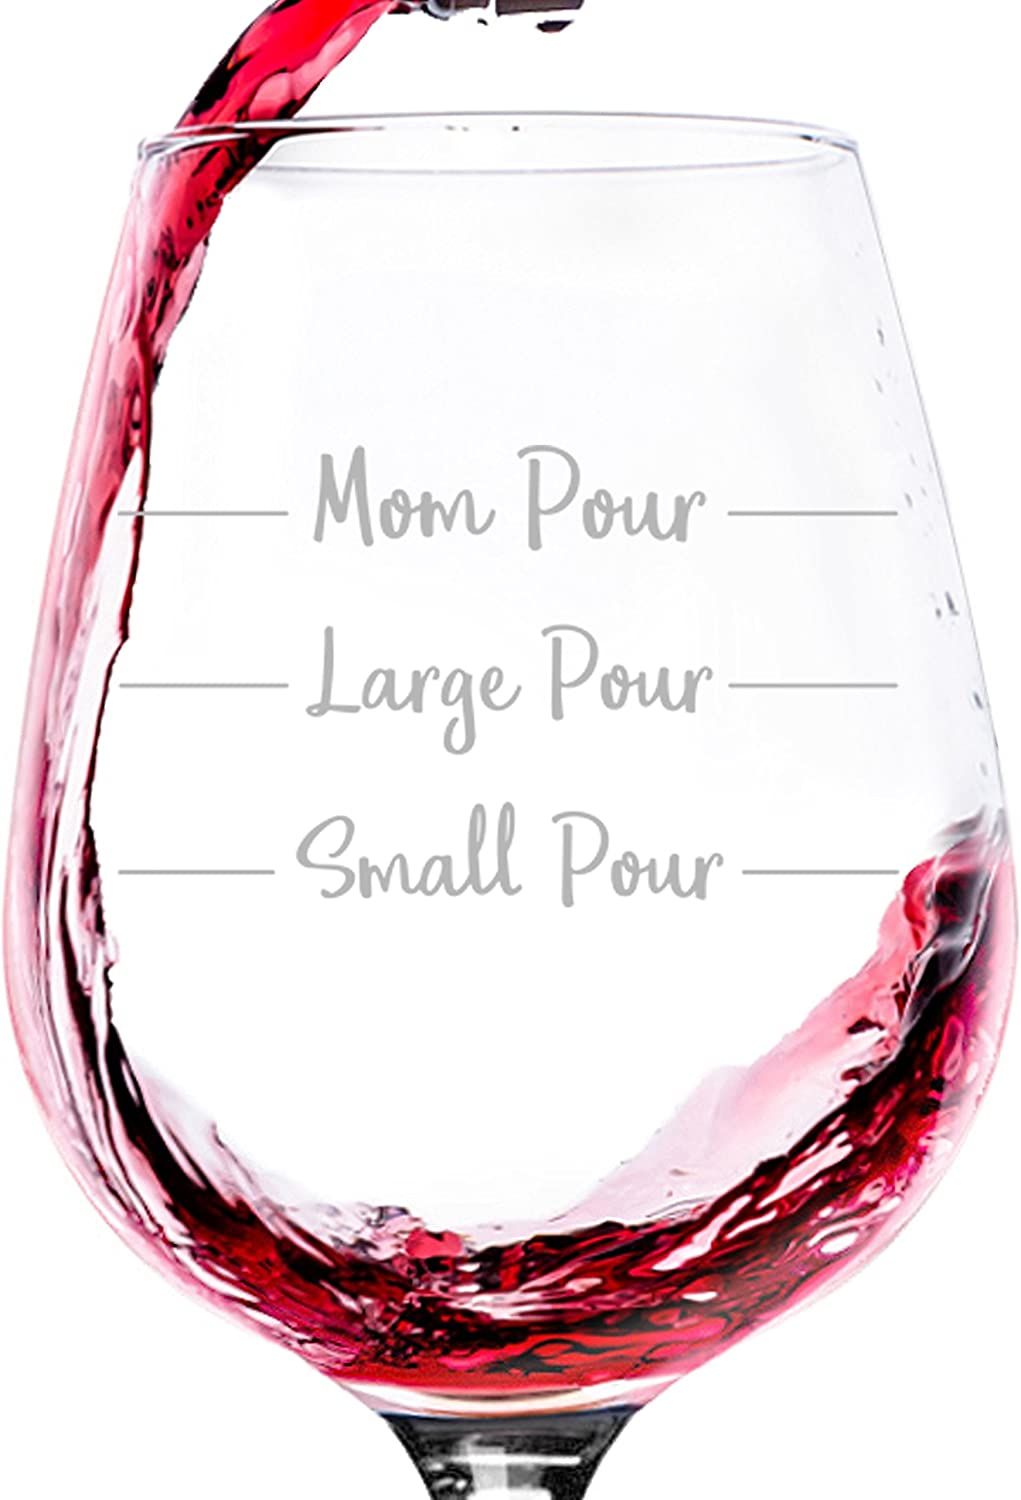 https://images.hellomagazine.com/horizon/original_aspect_ratio/11f722c8c6cd-mom-pour-wine-glass.jpg